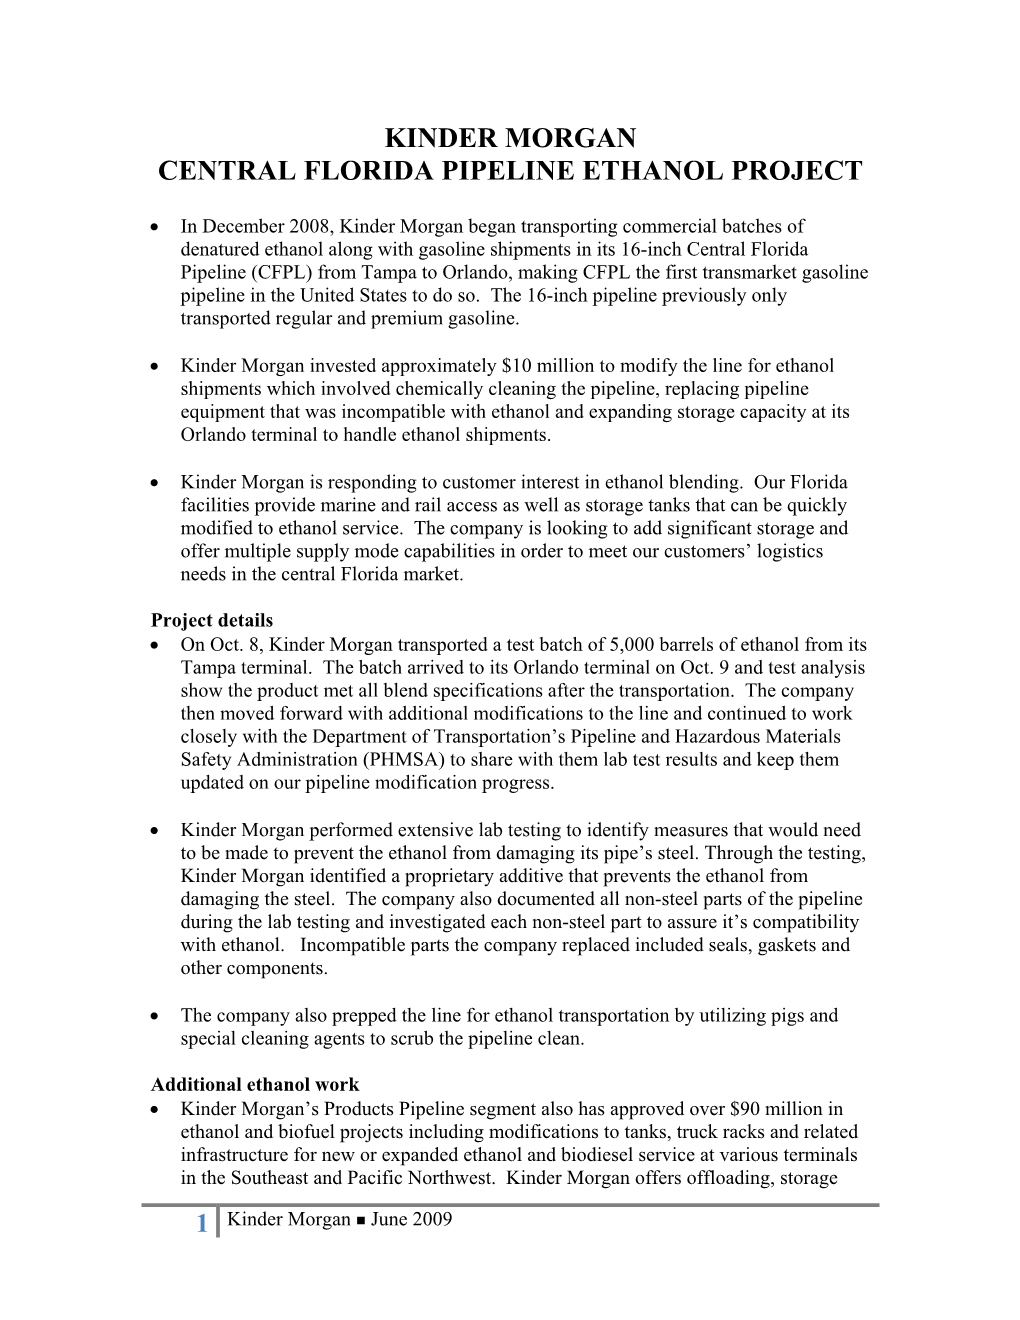 Kinder Morgan Central Florida Pipeline Ethanol Project